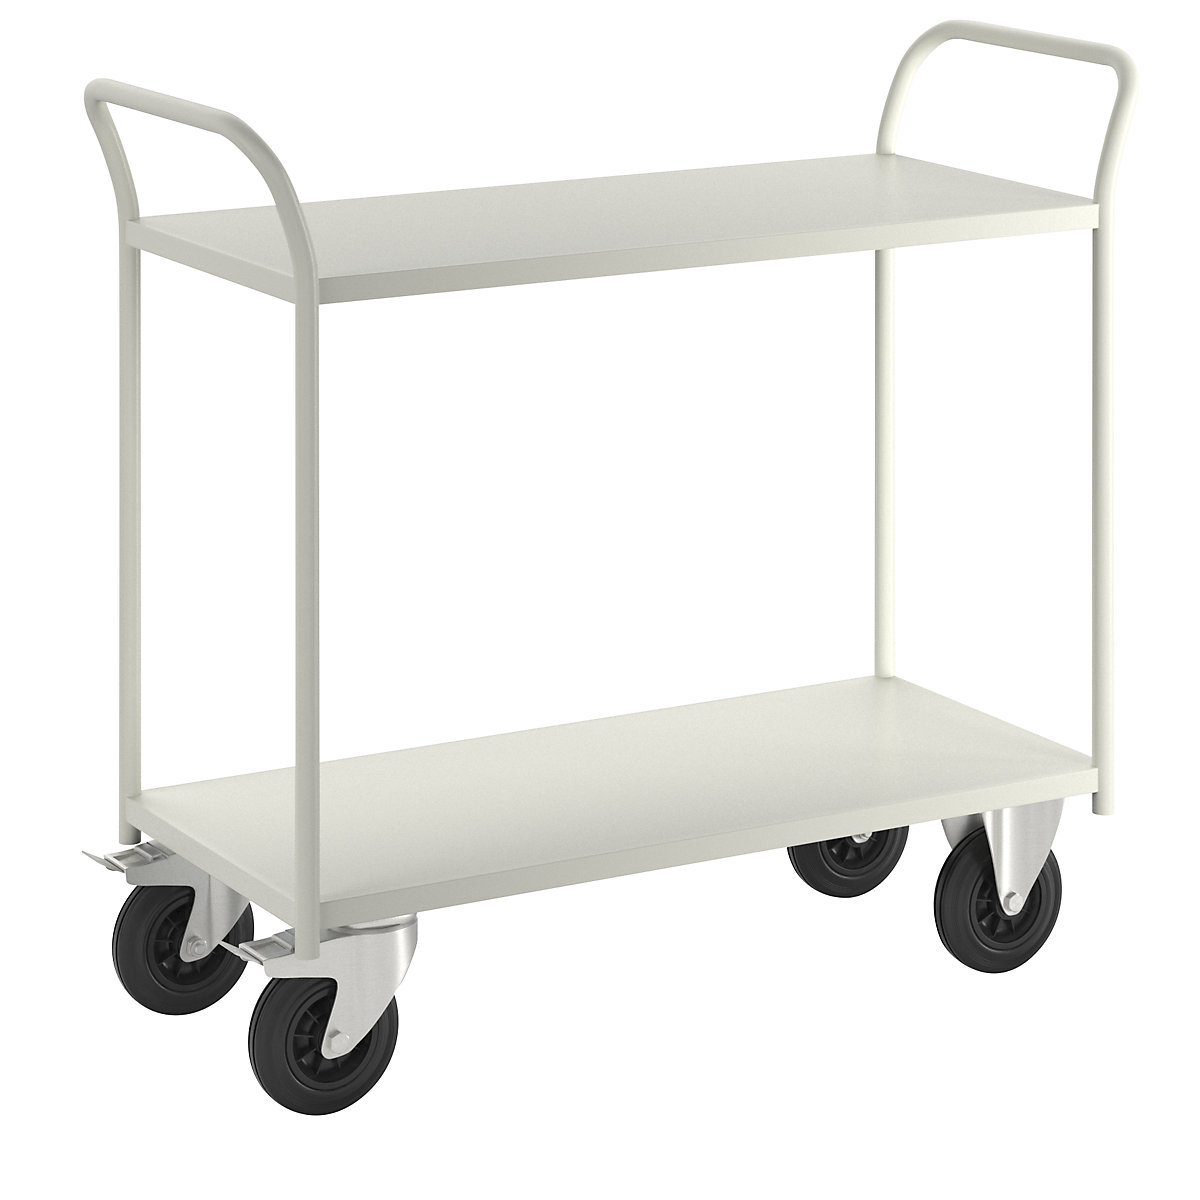 KM41 table trolley – Kongamek, 2 shelves, LxWxH 1080 x 450 x 975 mm, white, 2 swivel castors with stops, 2 fixed castors-3